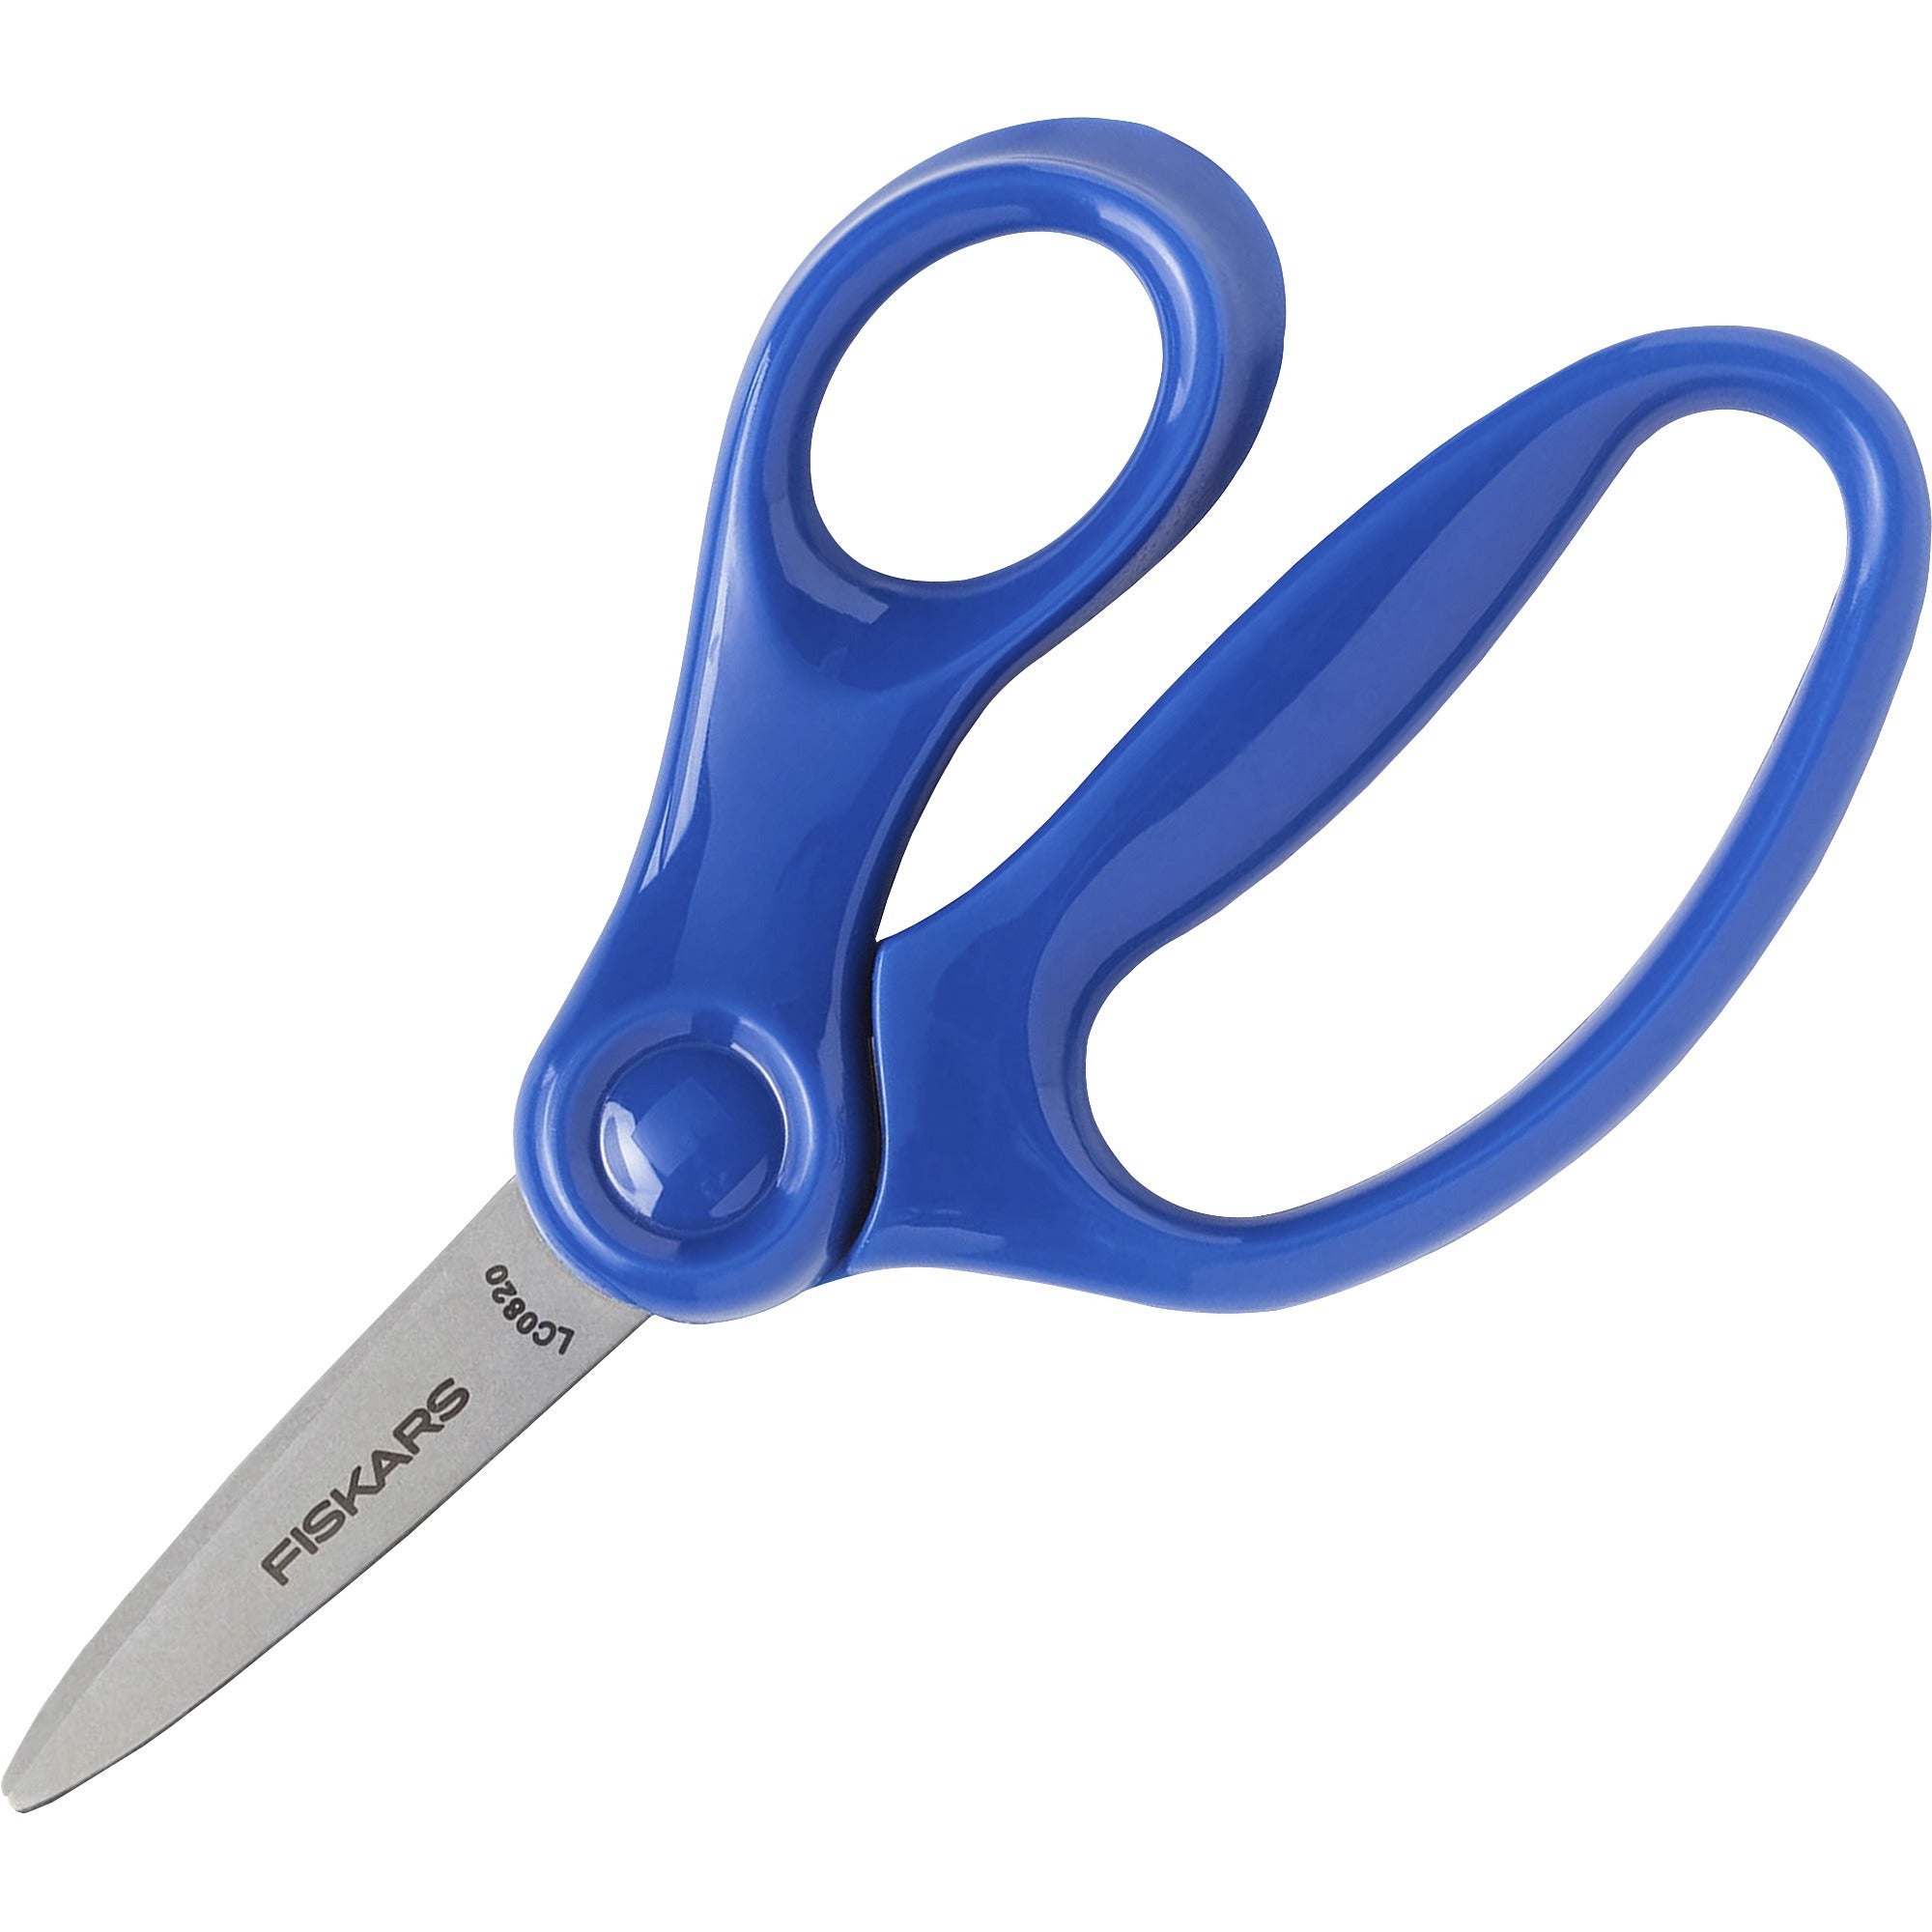 fiskars-5-pointed-tip-kids-scissors-5-overall-lengthsafety-edge-blade-pointed-tip-blue-1-each_fsk1943001068 - 1